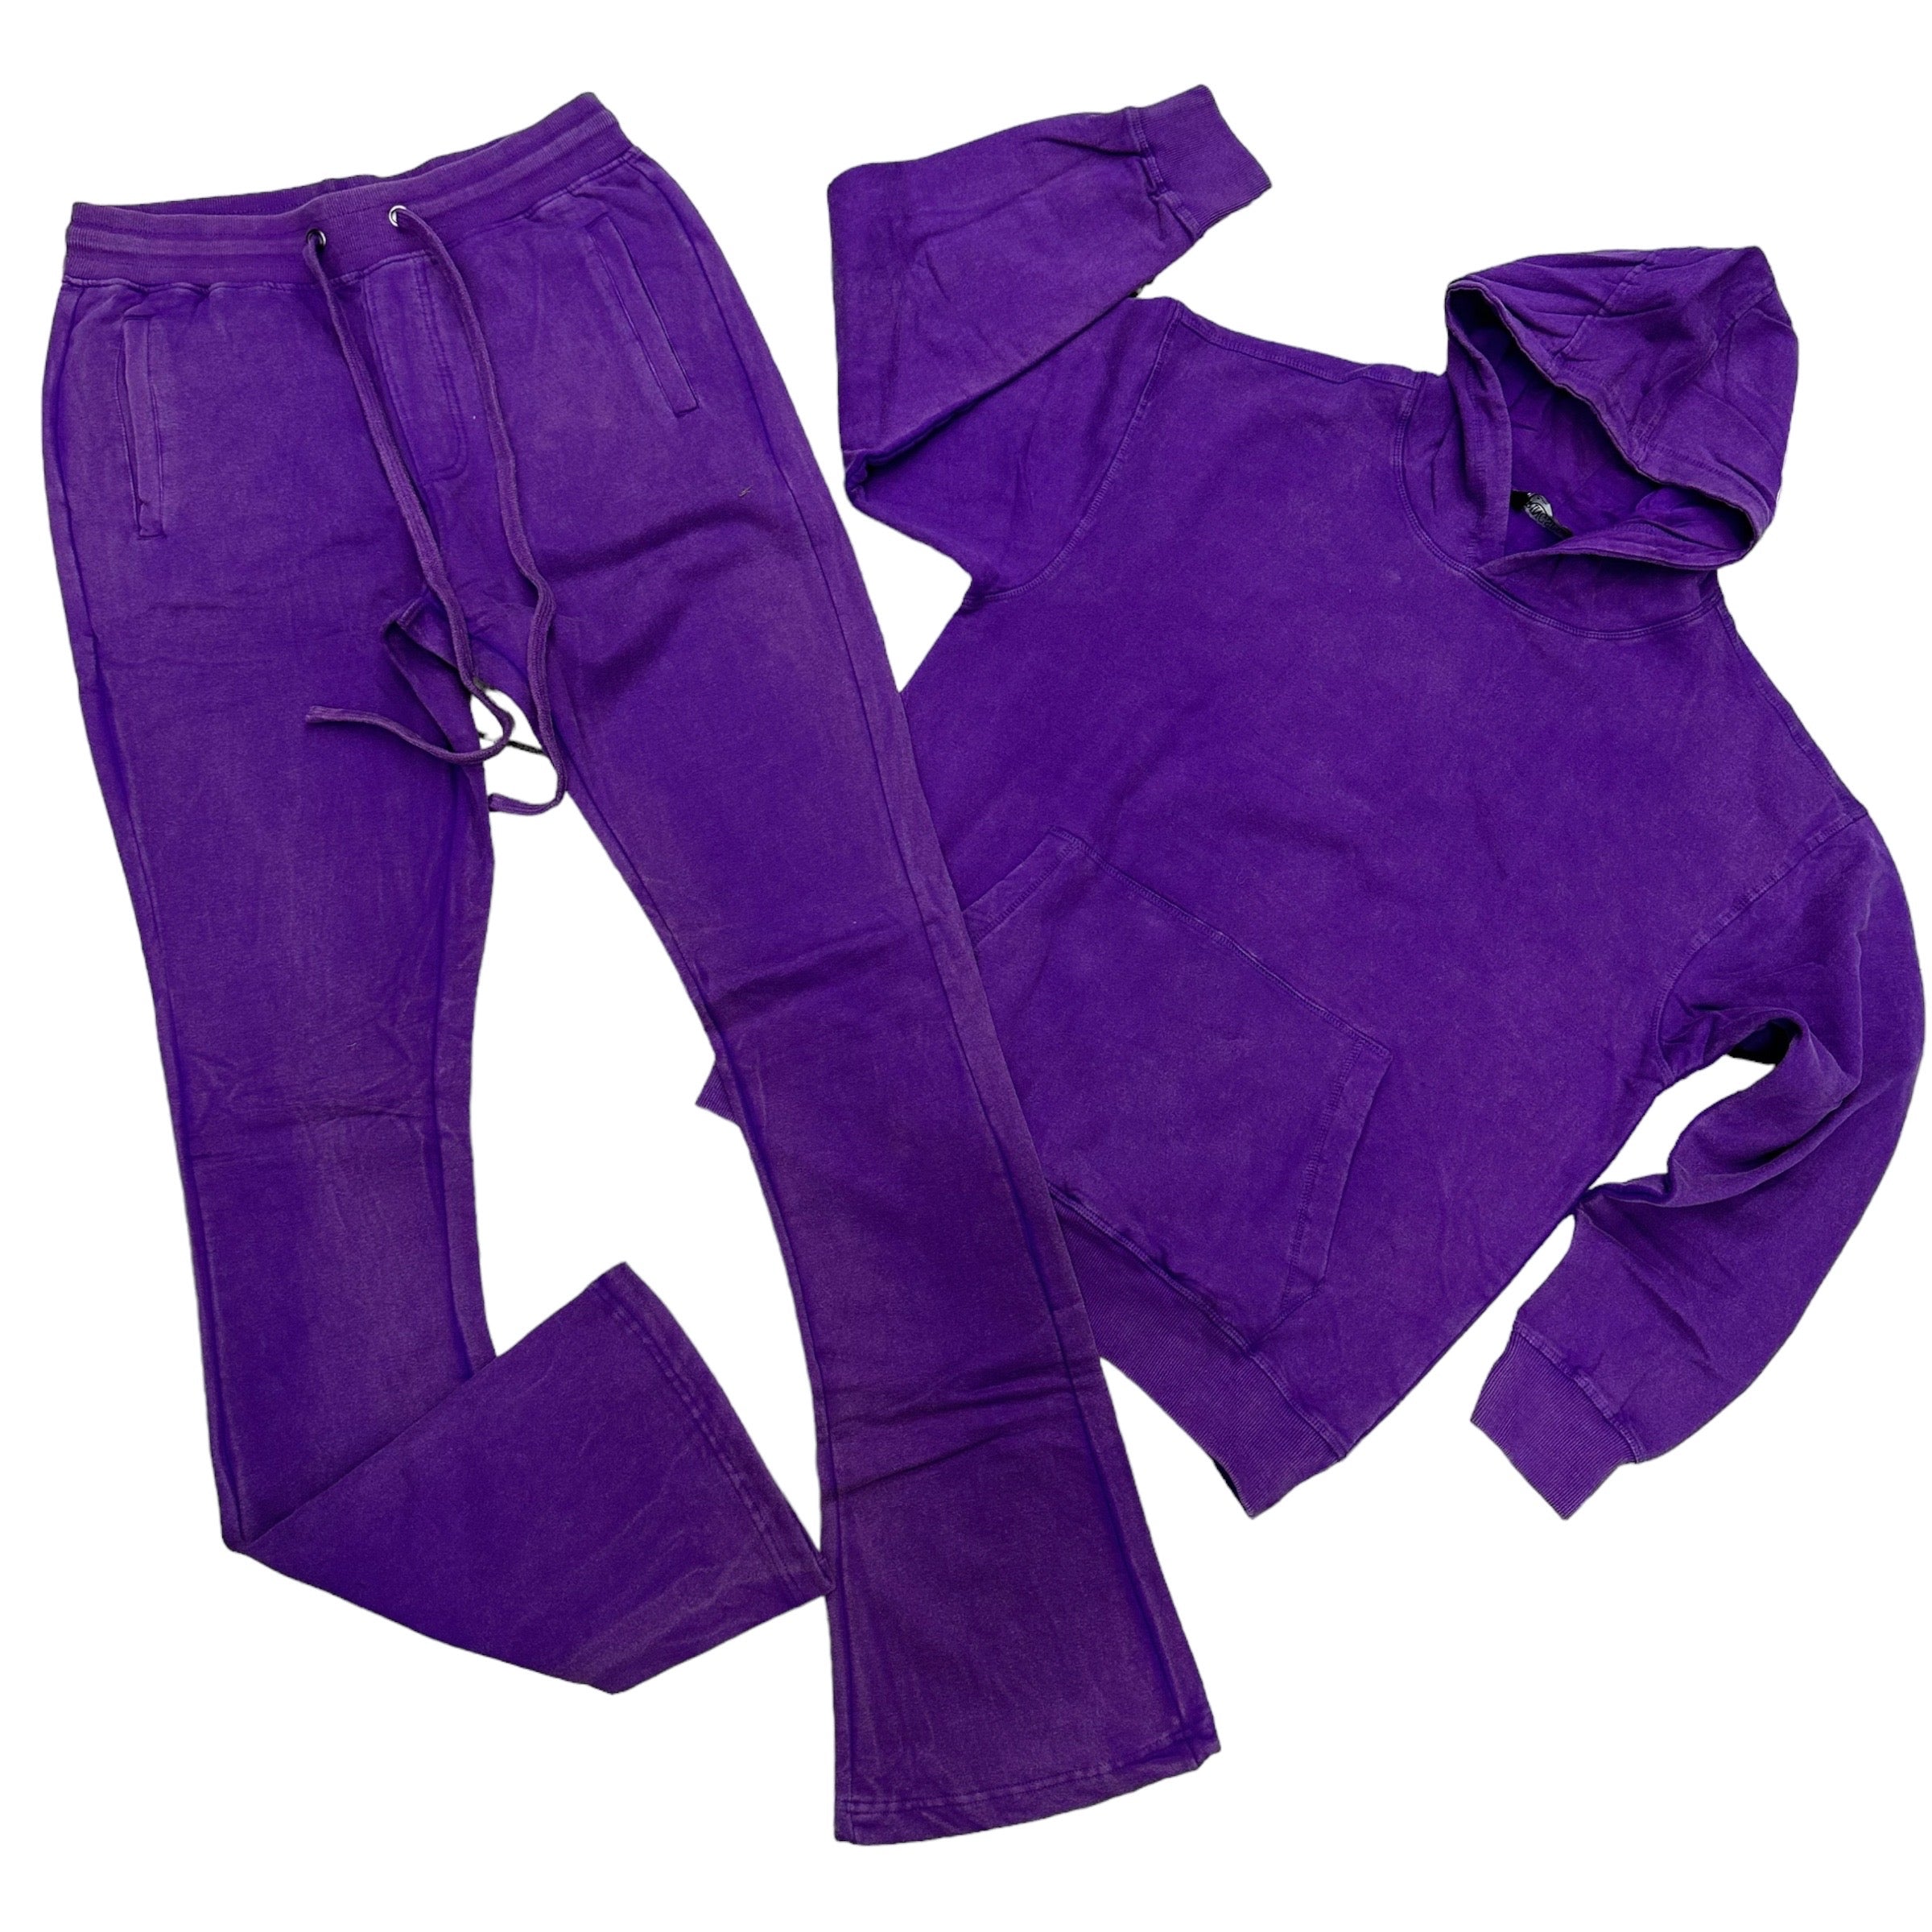 Rs Stacked acid Pullover hoodie set Purple 301 401